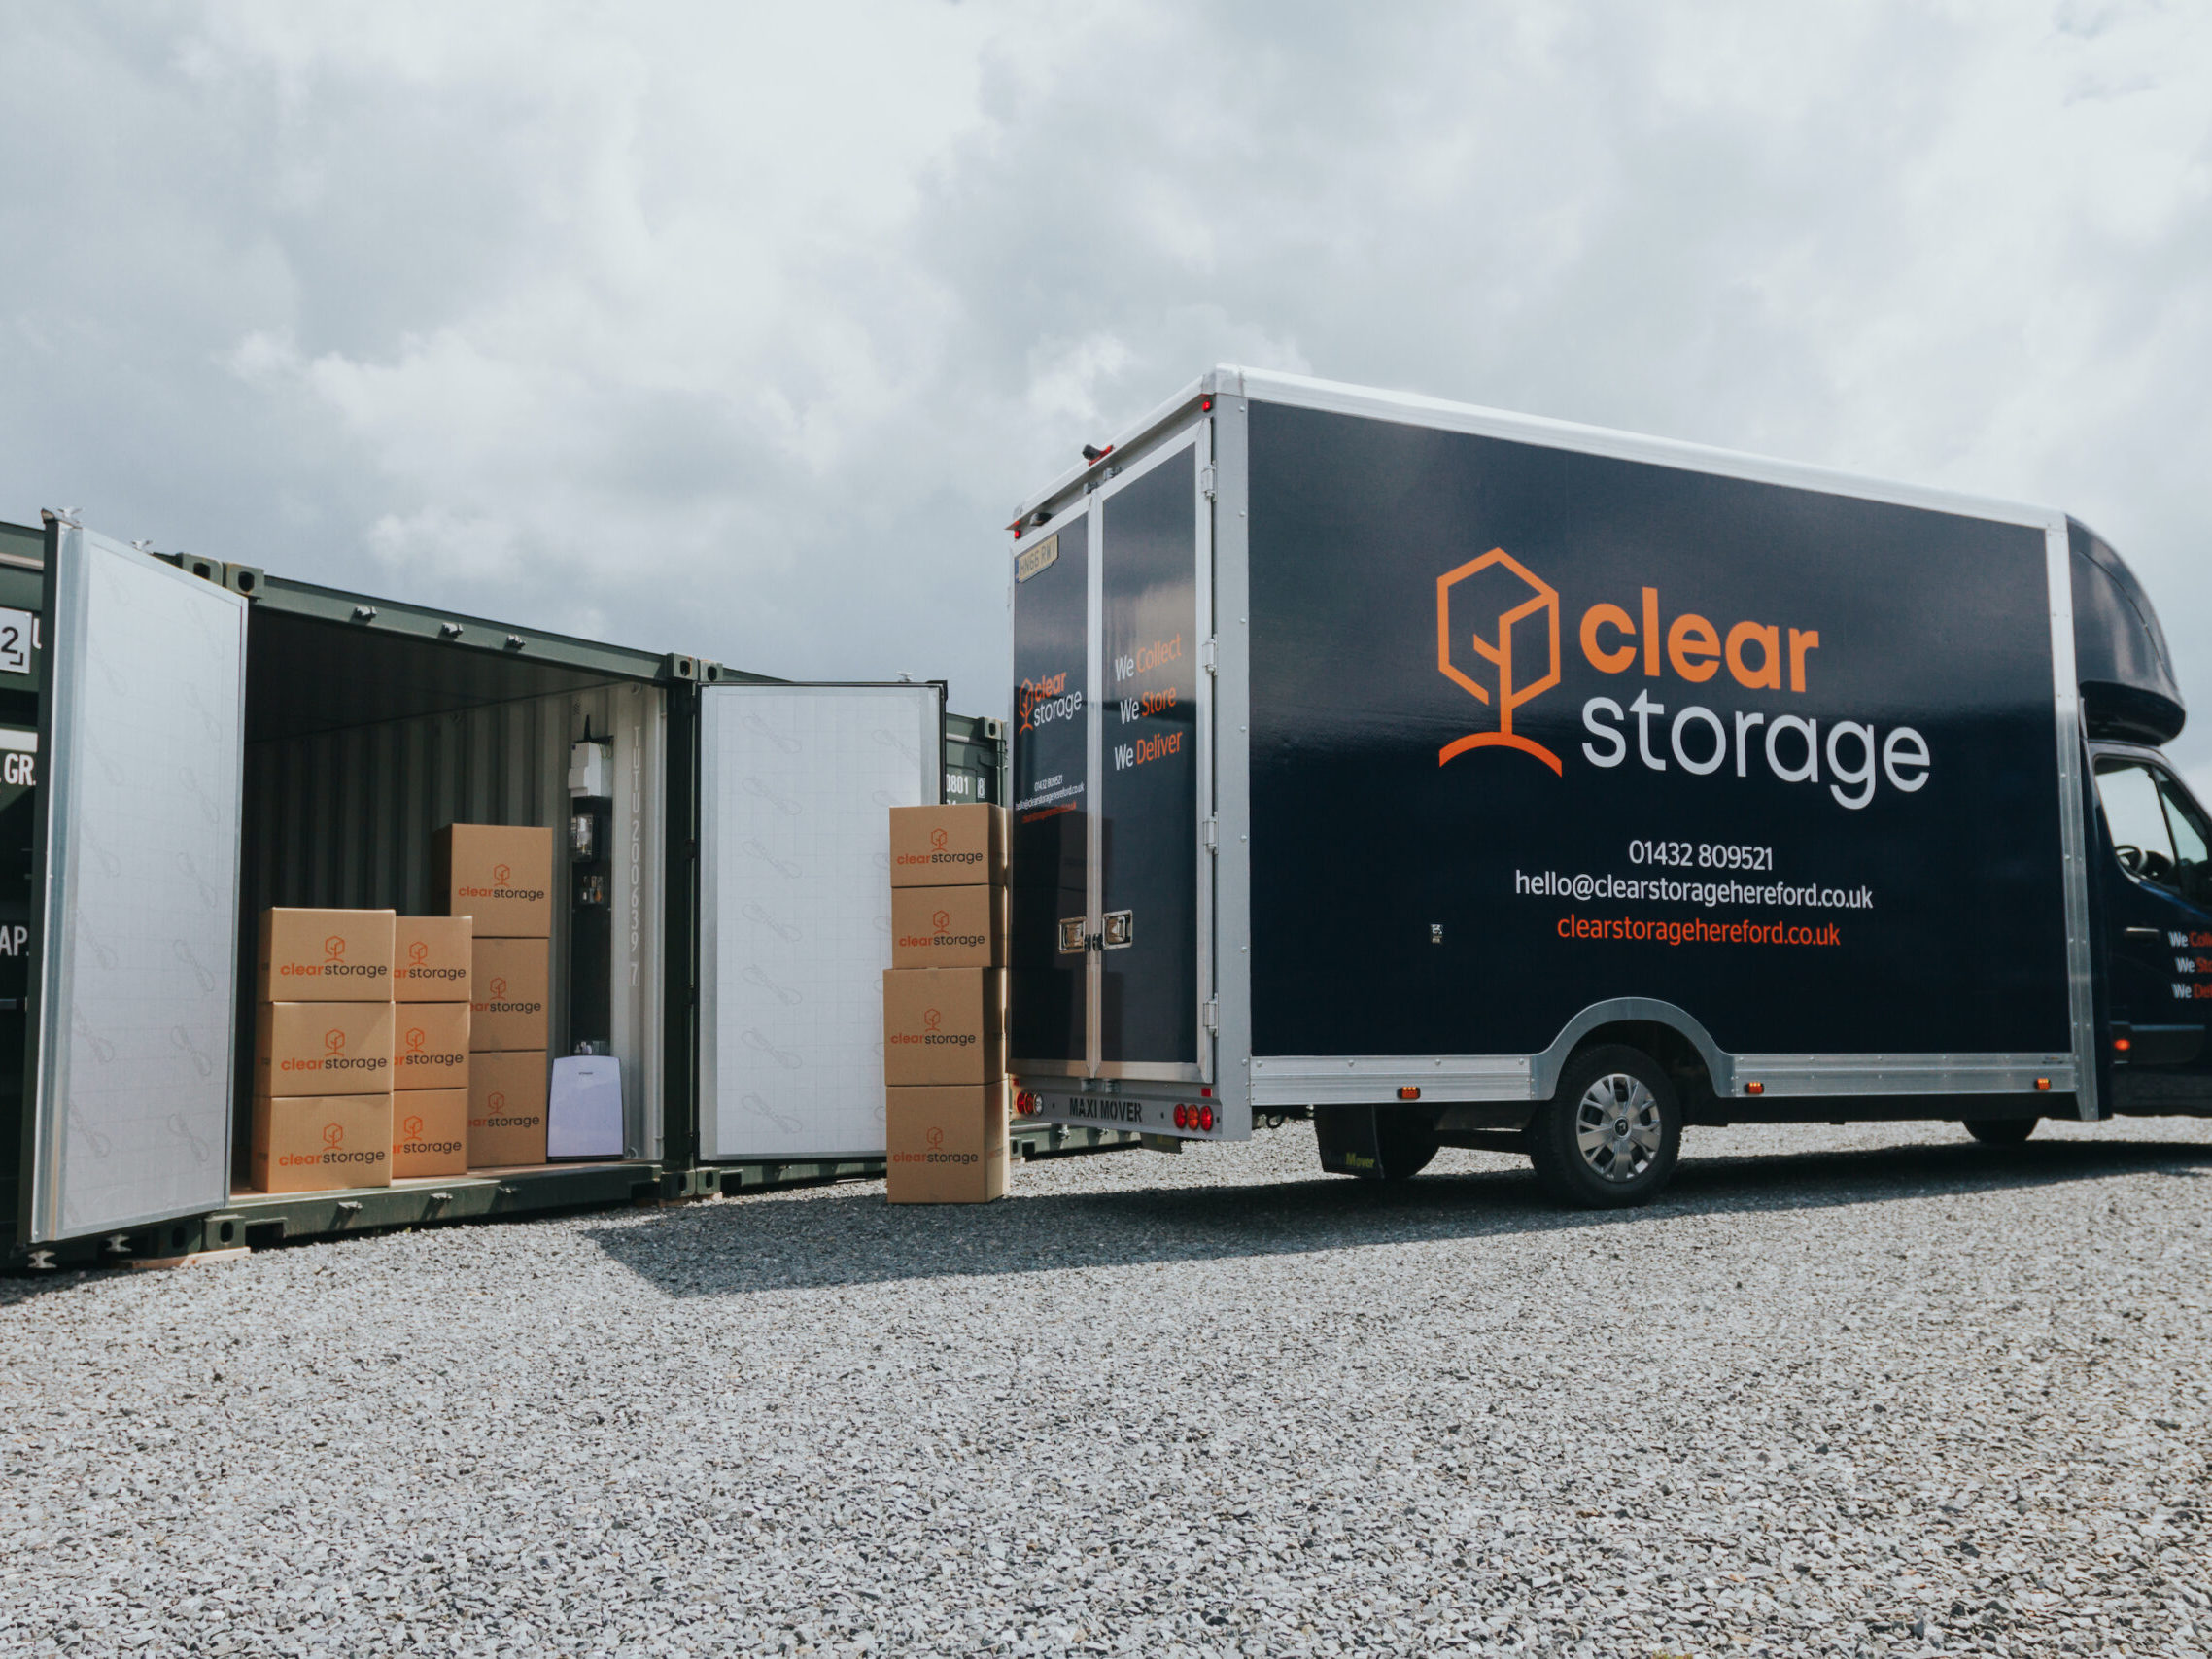 Clear-Storage-Van-scaled-aspect-ratio-580-435